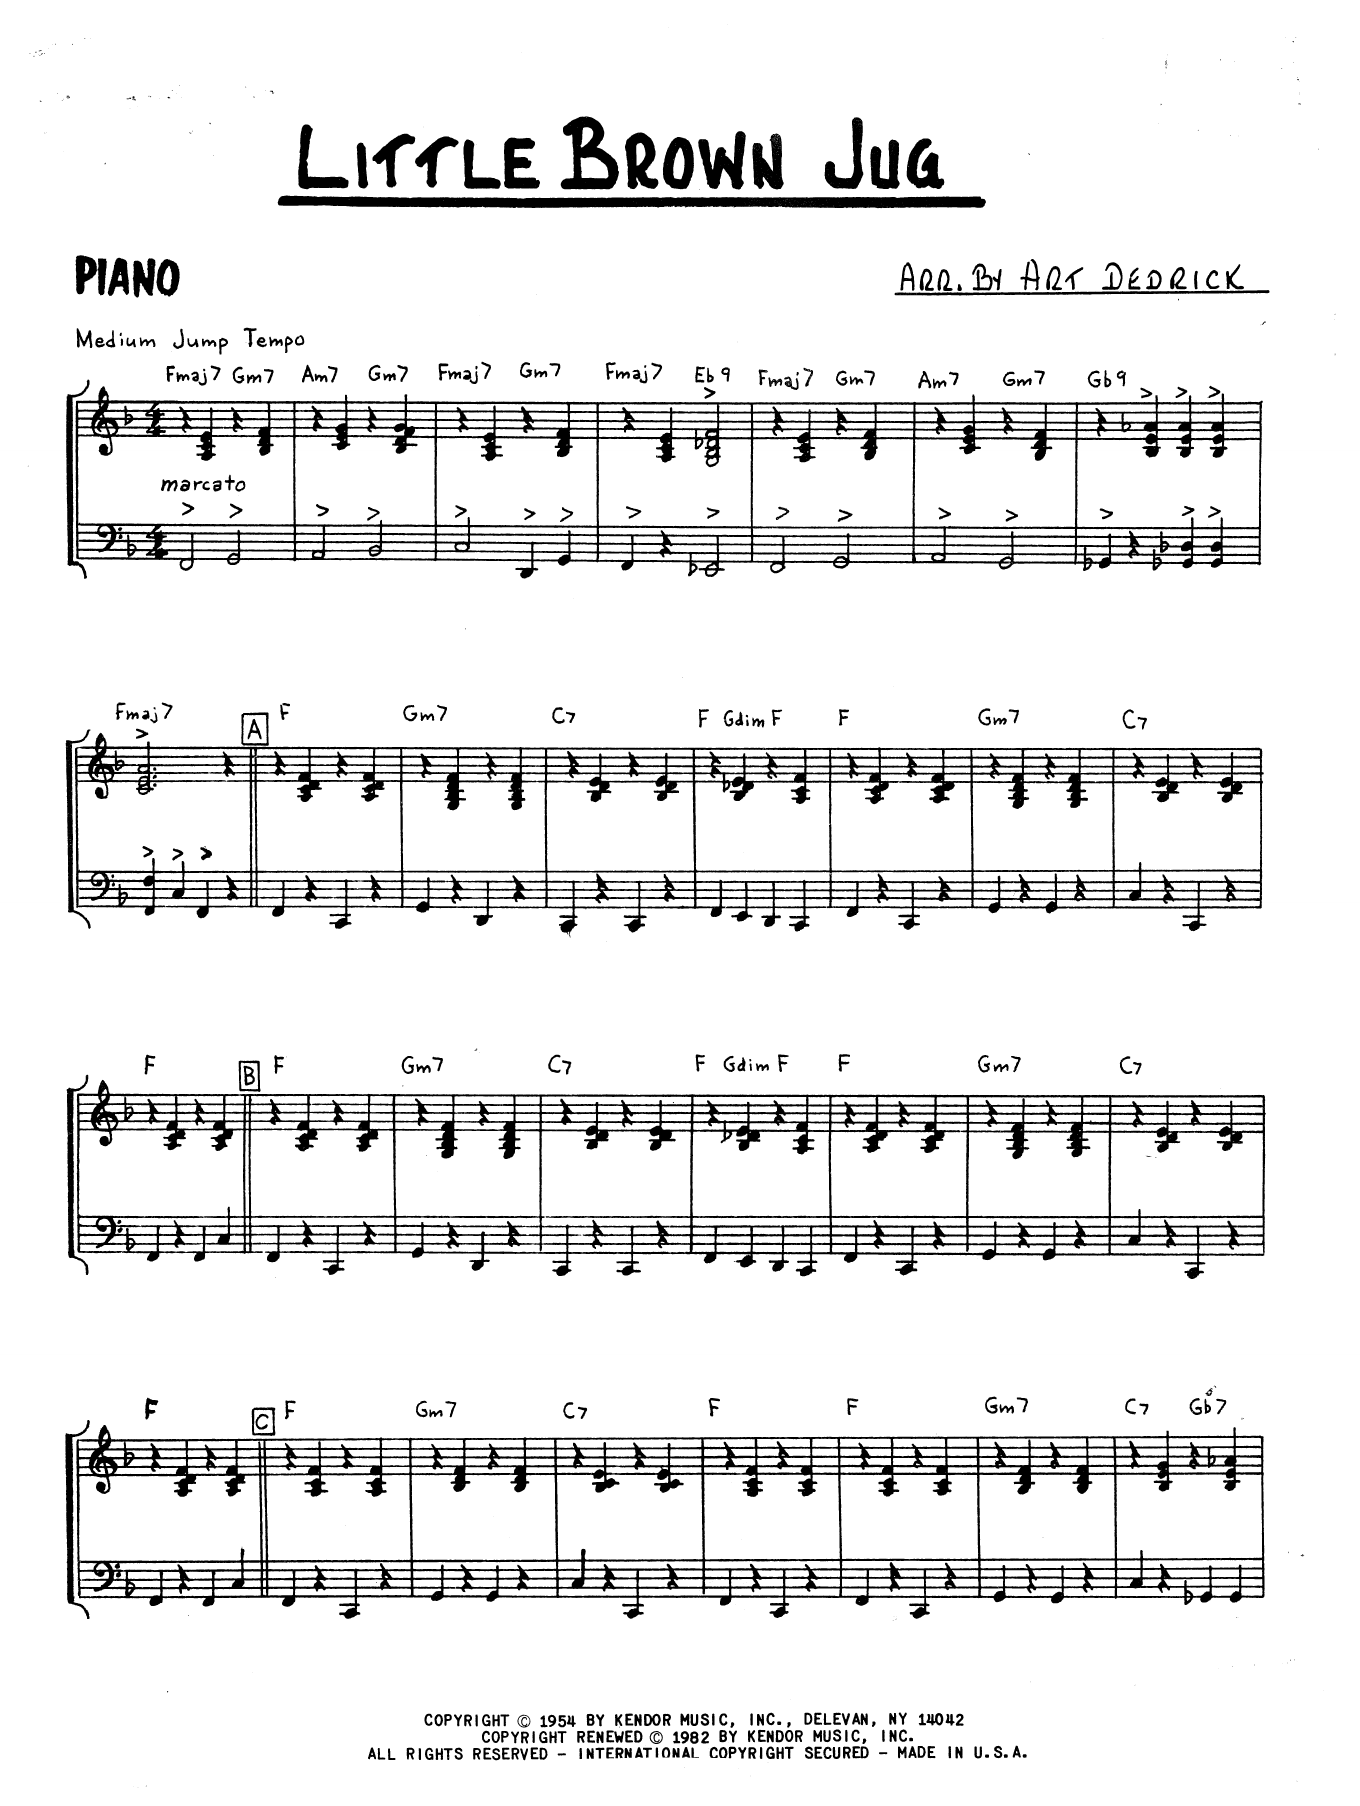 art-dedrick-little-brown-jug-piano-sheet-music-notes-chords-jazz